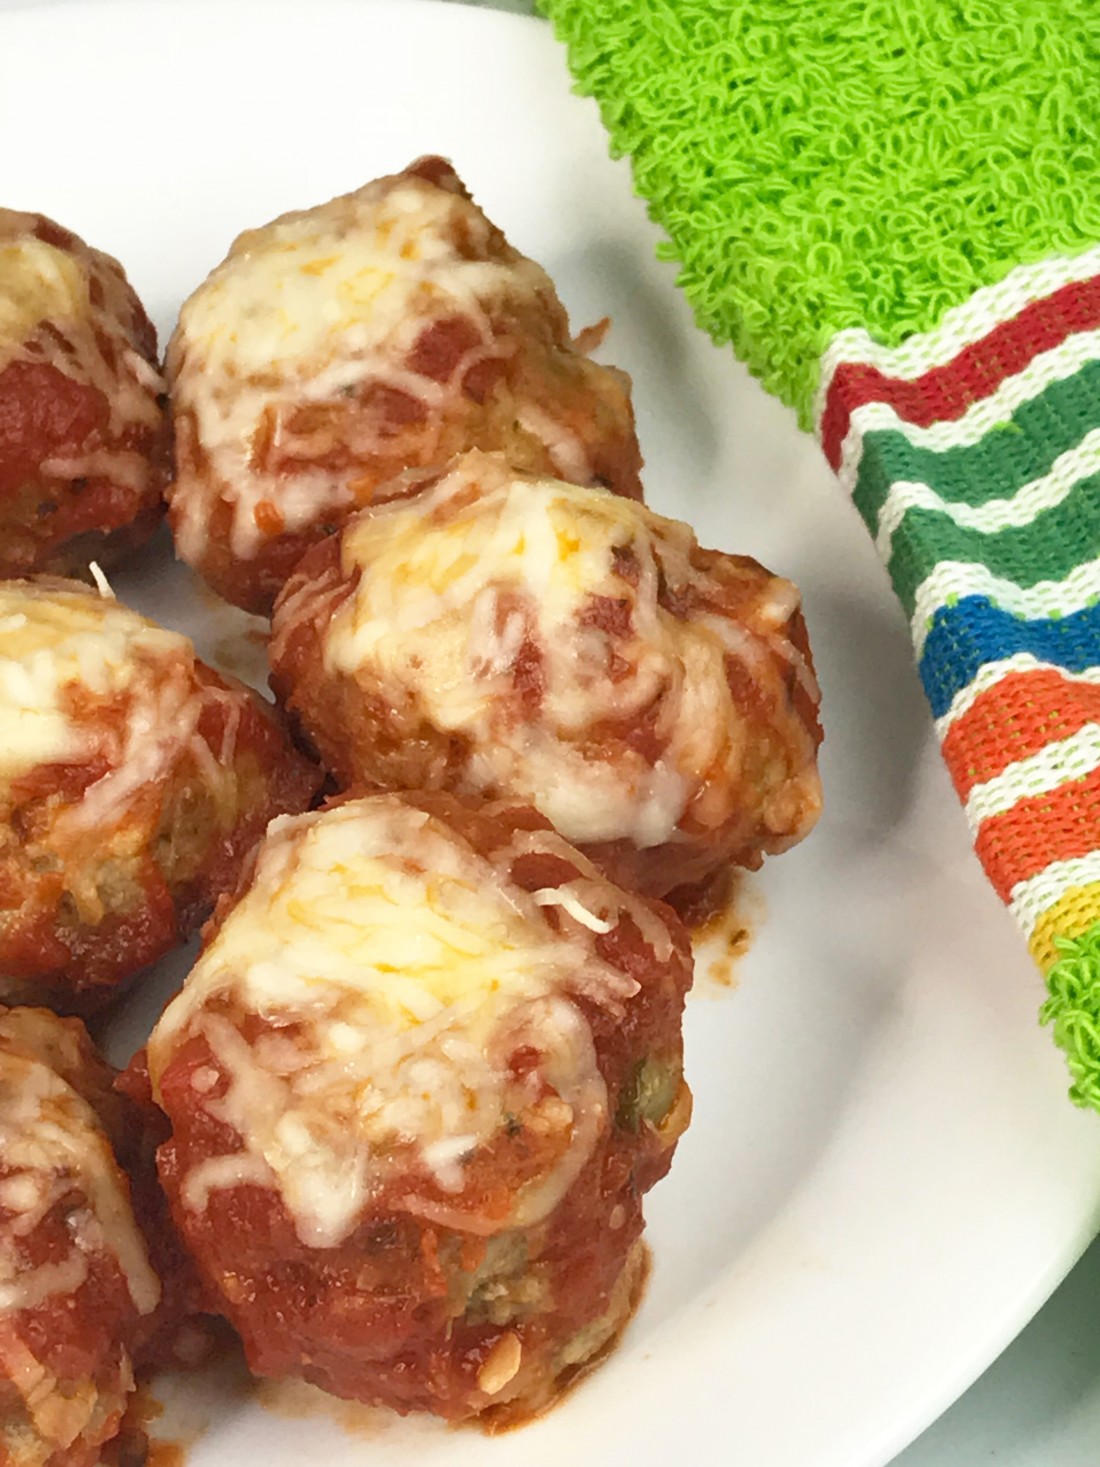 Instant Pot Pizza Meatballs – 4 Ww Freestyle Points Per Serving